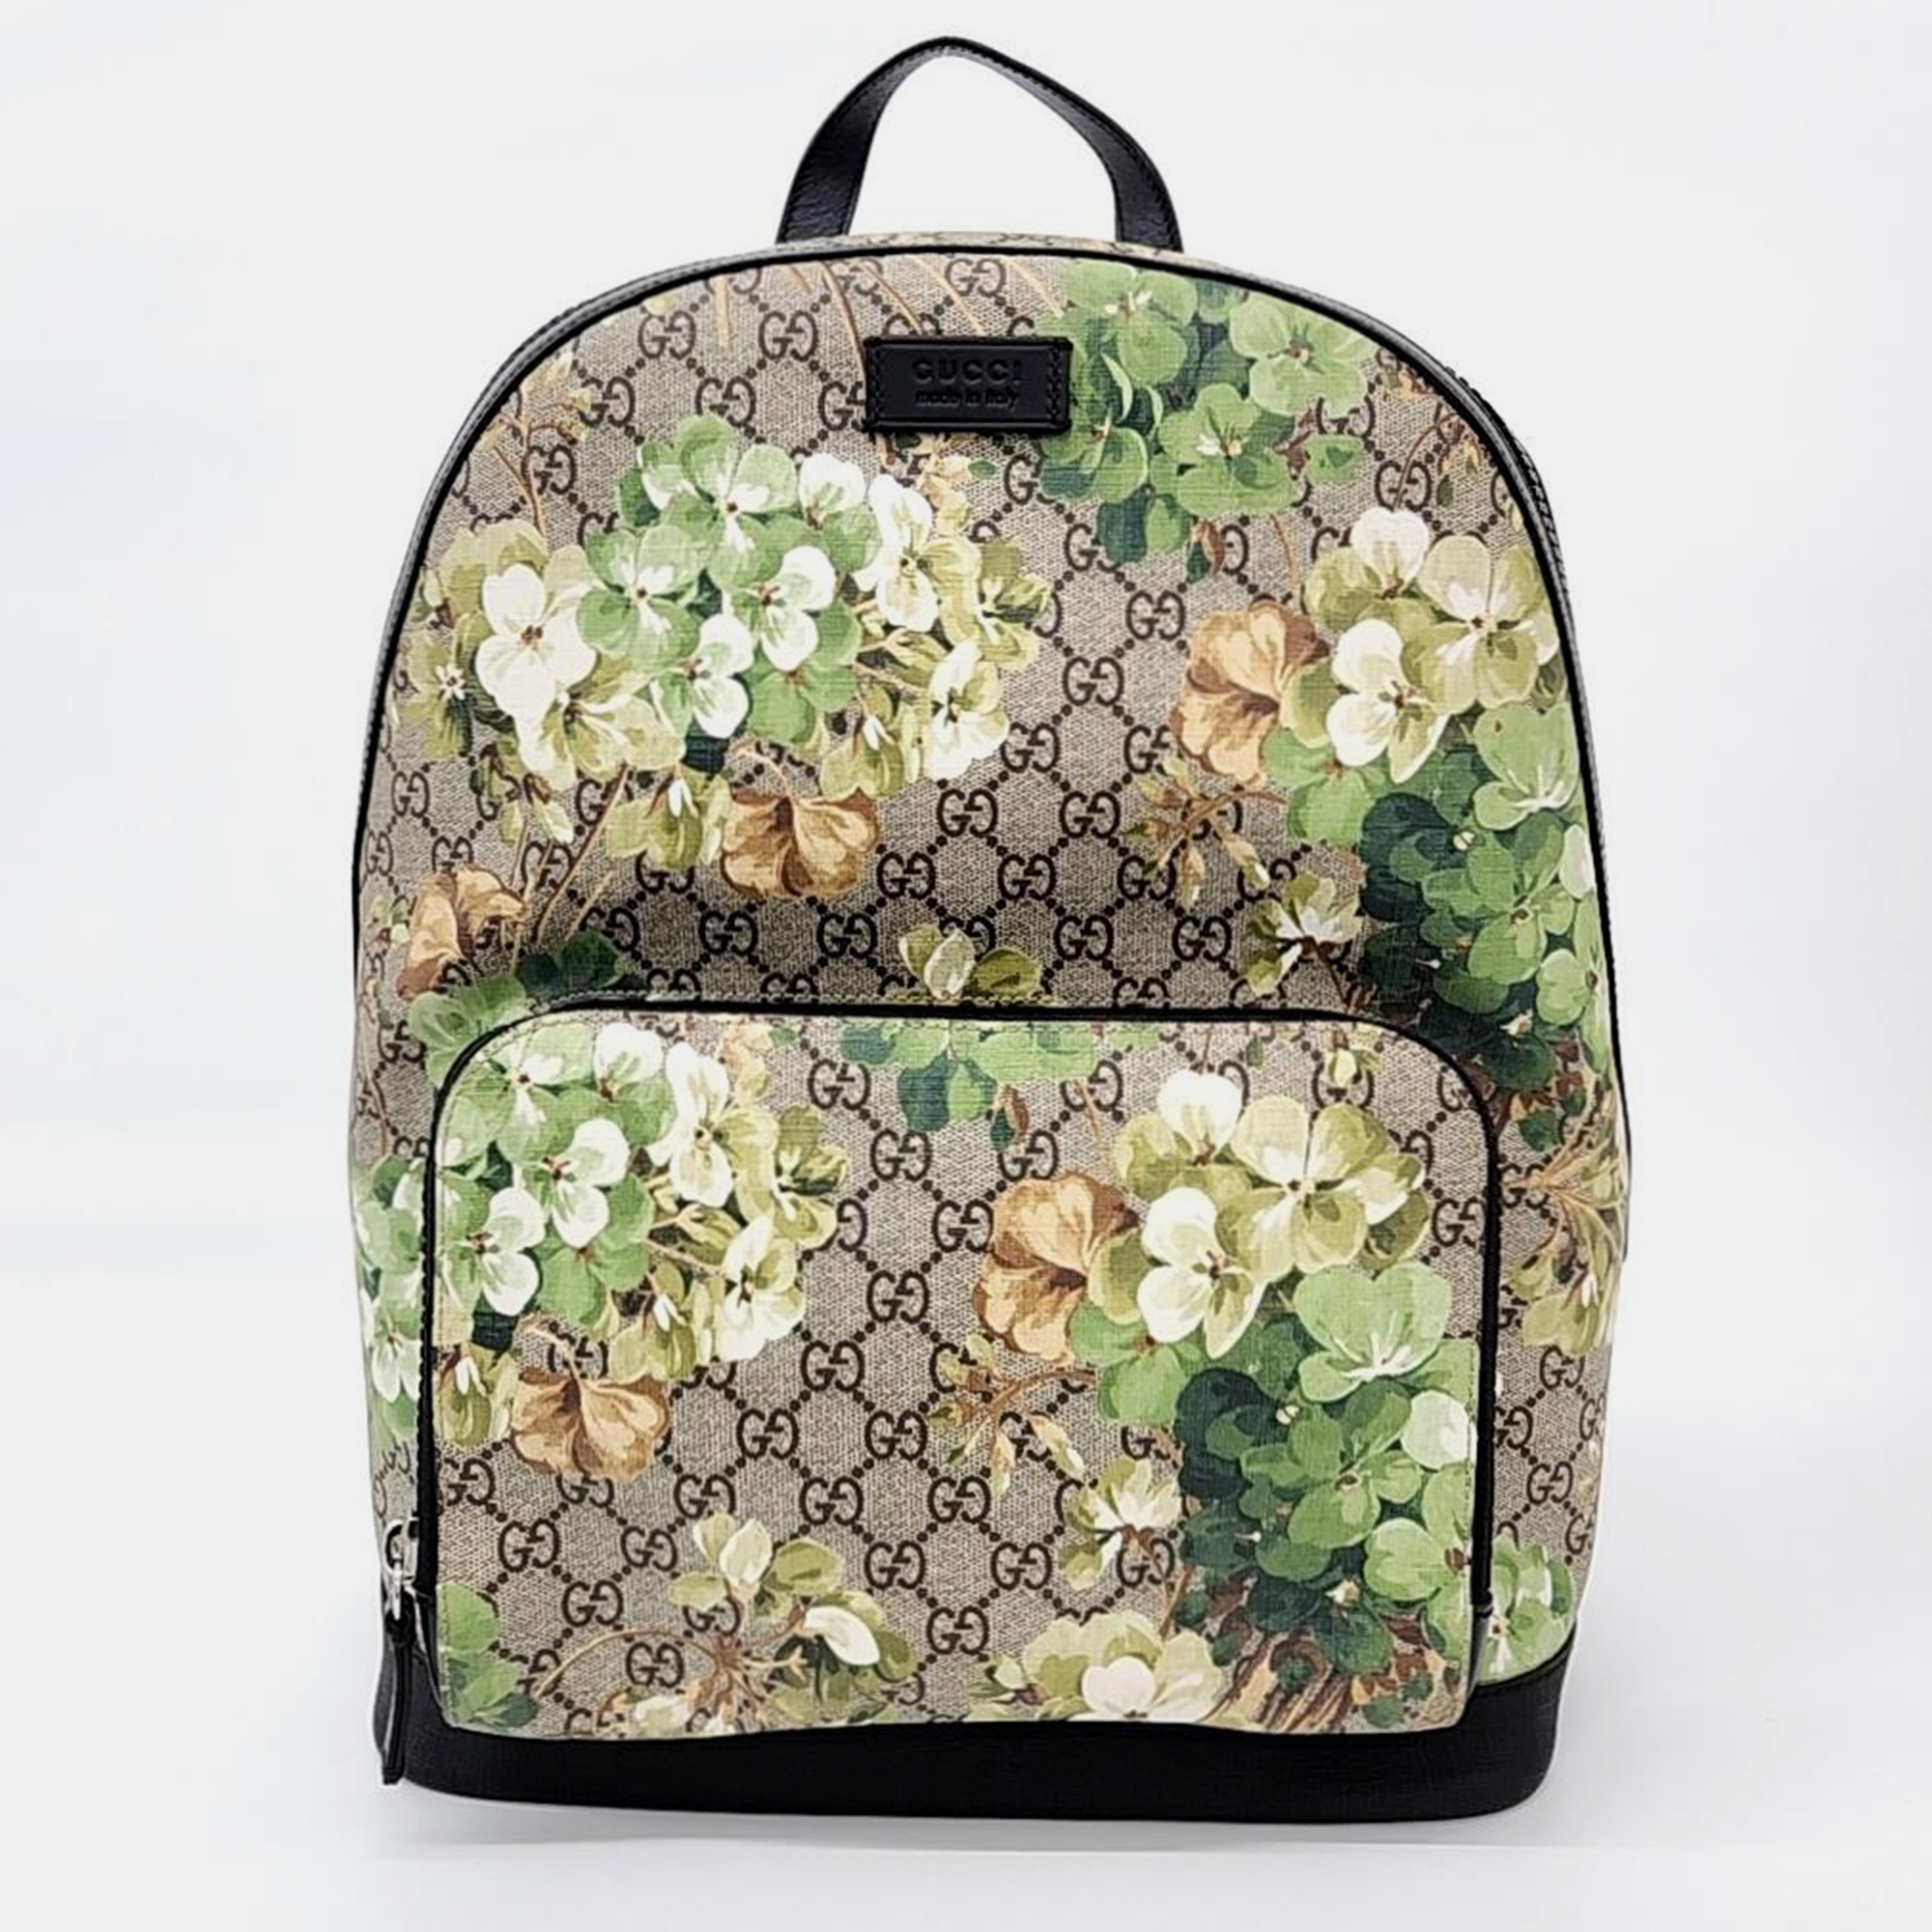 Gucci multicolor gg supreme canvas bloom backpack